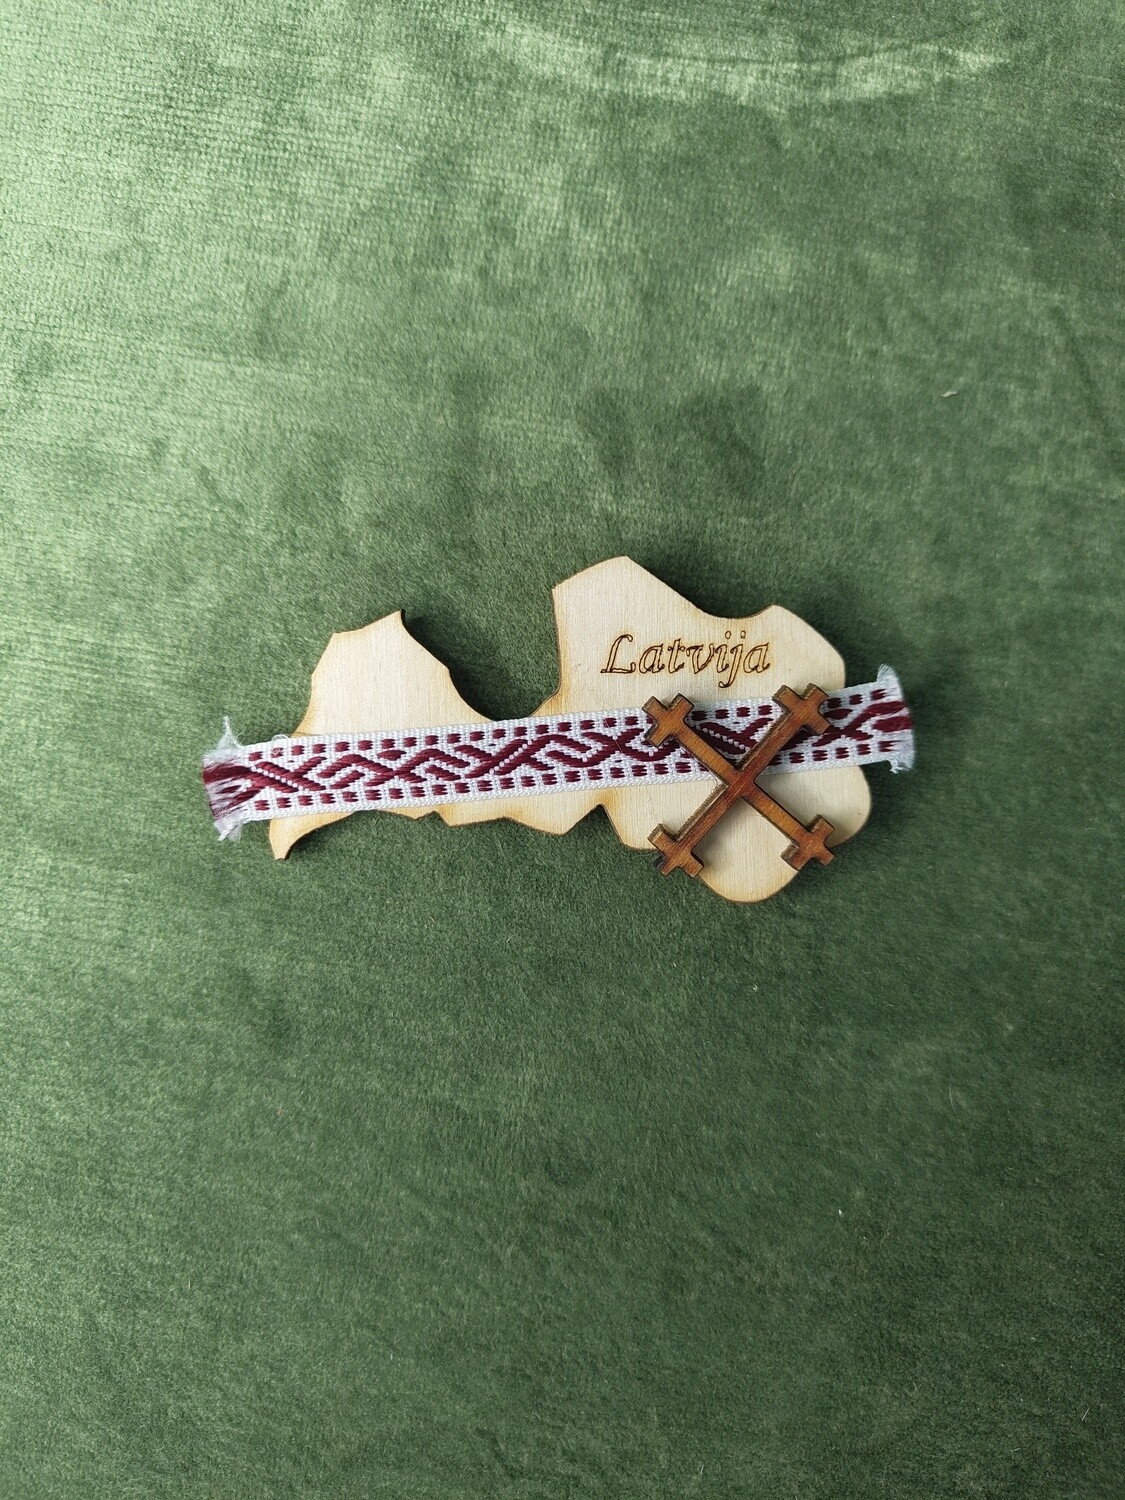 Koka magnēts ar lenti "Karte Latvija - Māras krusts"